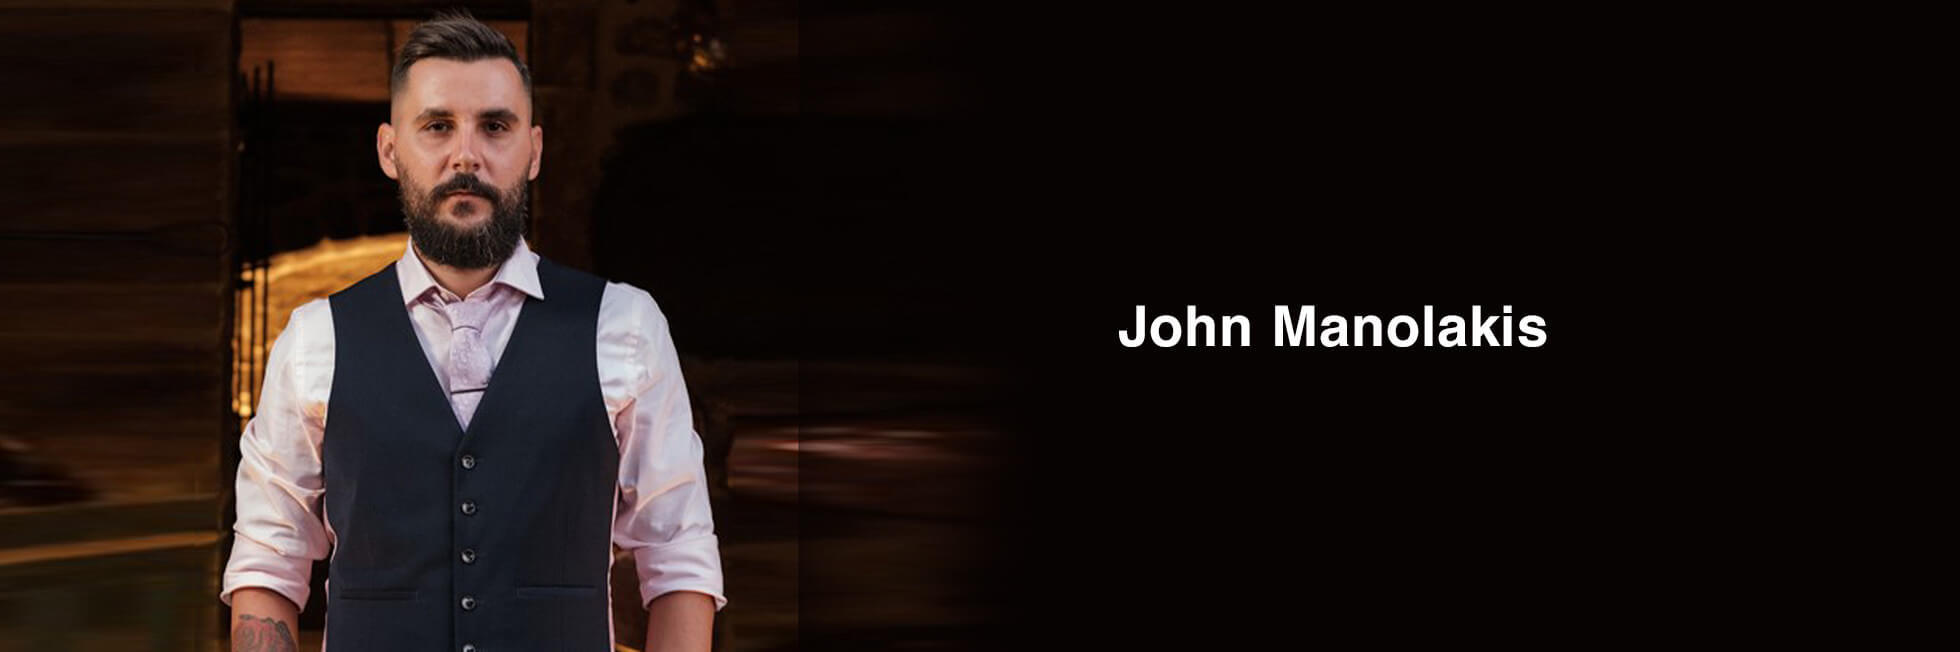 John Manolakis